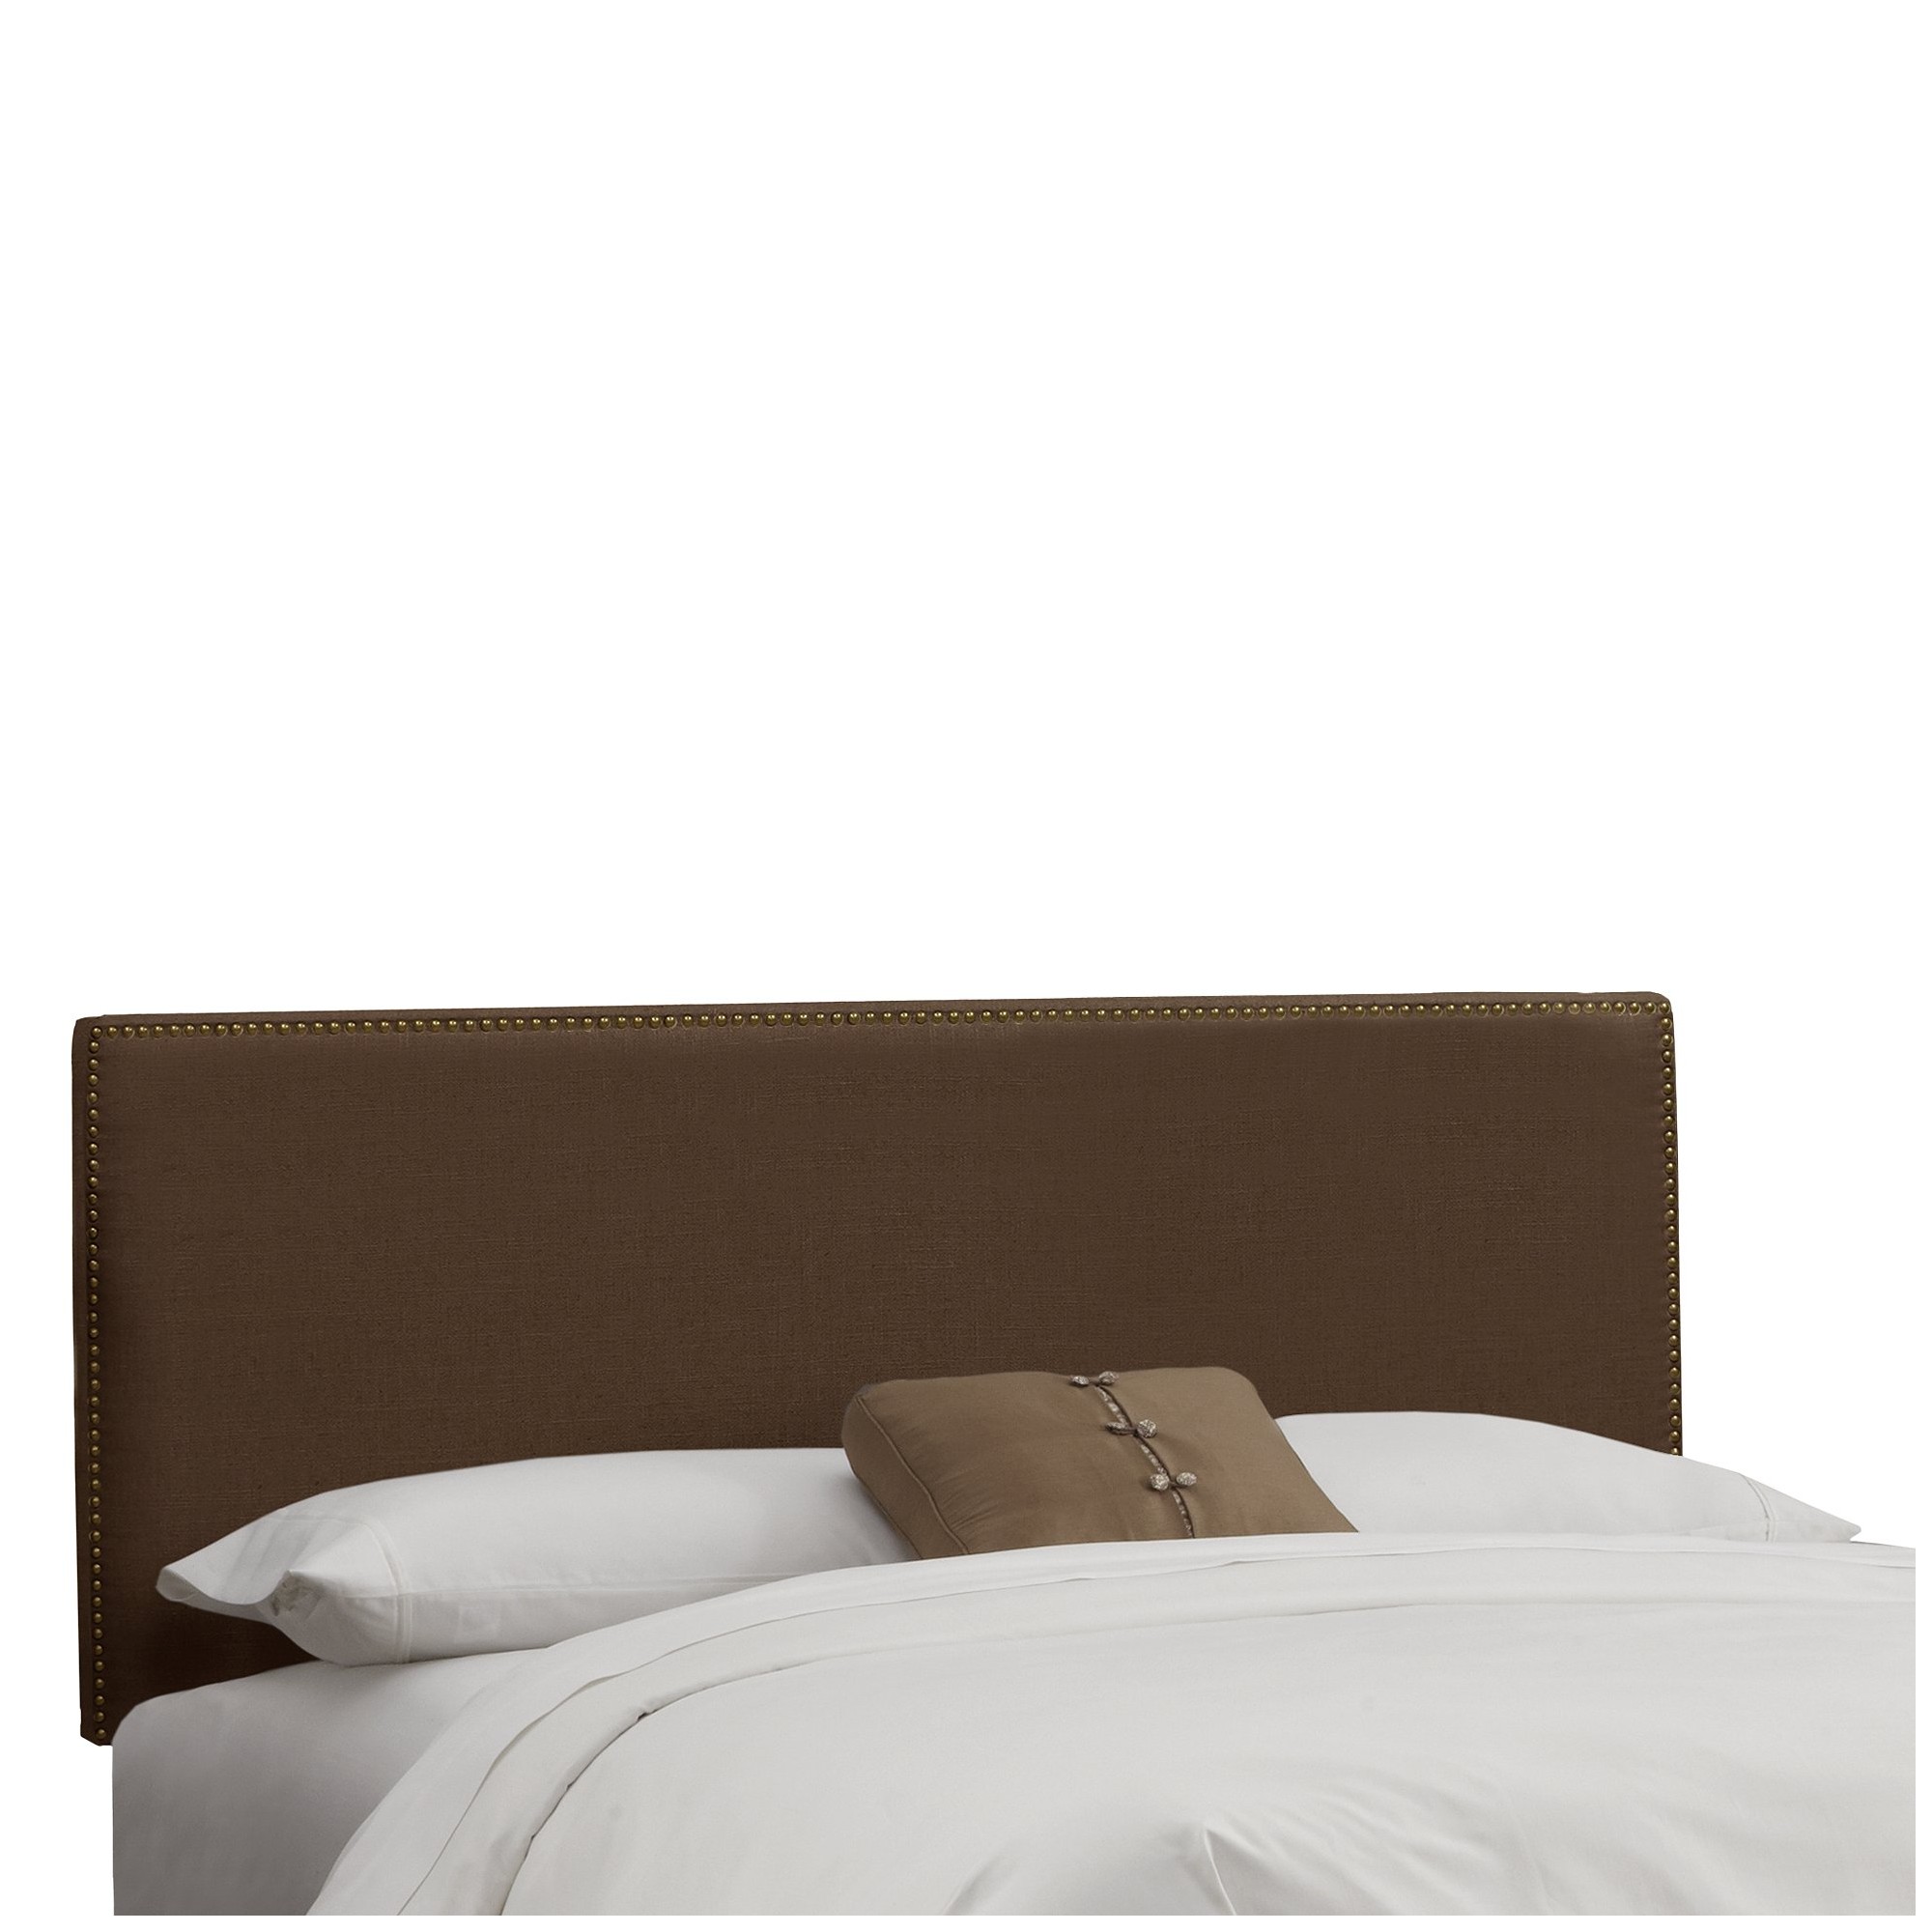 California King Arcadia Nailbutton Headboard Linen Chocolate with Brass Nail Buttons - Skyline Furniture, Linen Brown